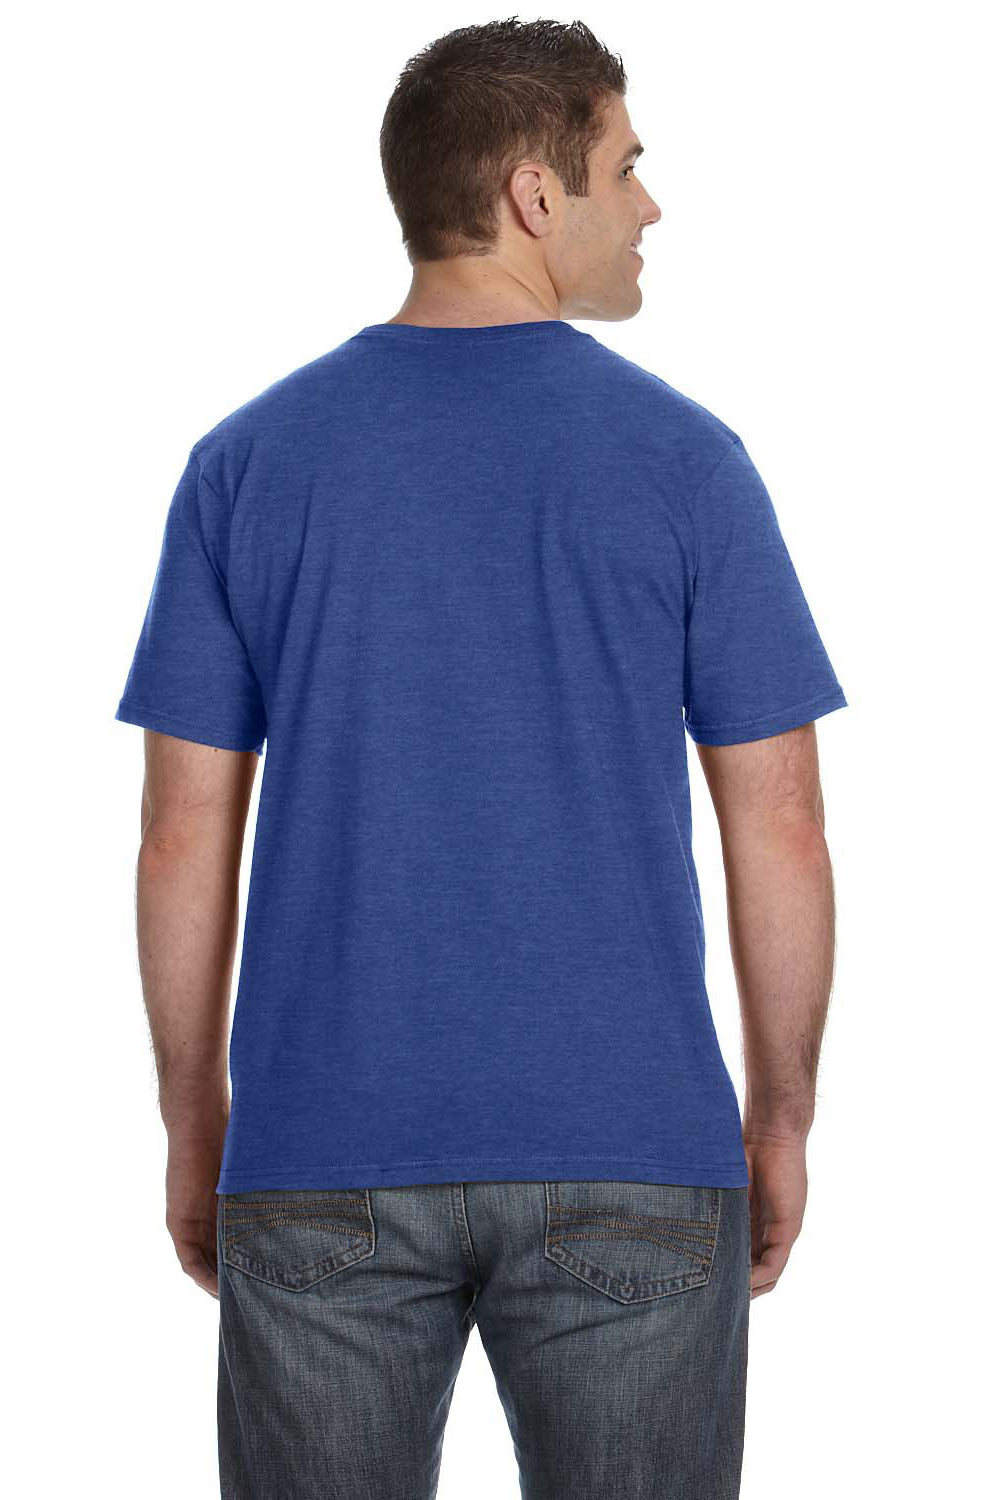 Anvil 980 Mens Short Sleeve Crewneck T-Shirt Heather Blue Back